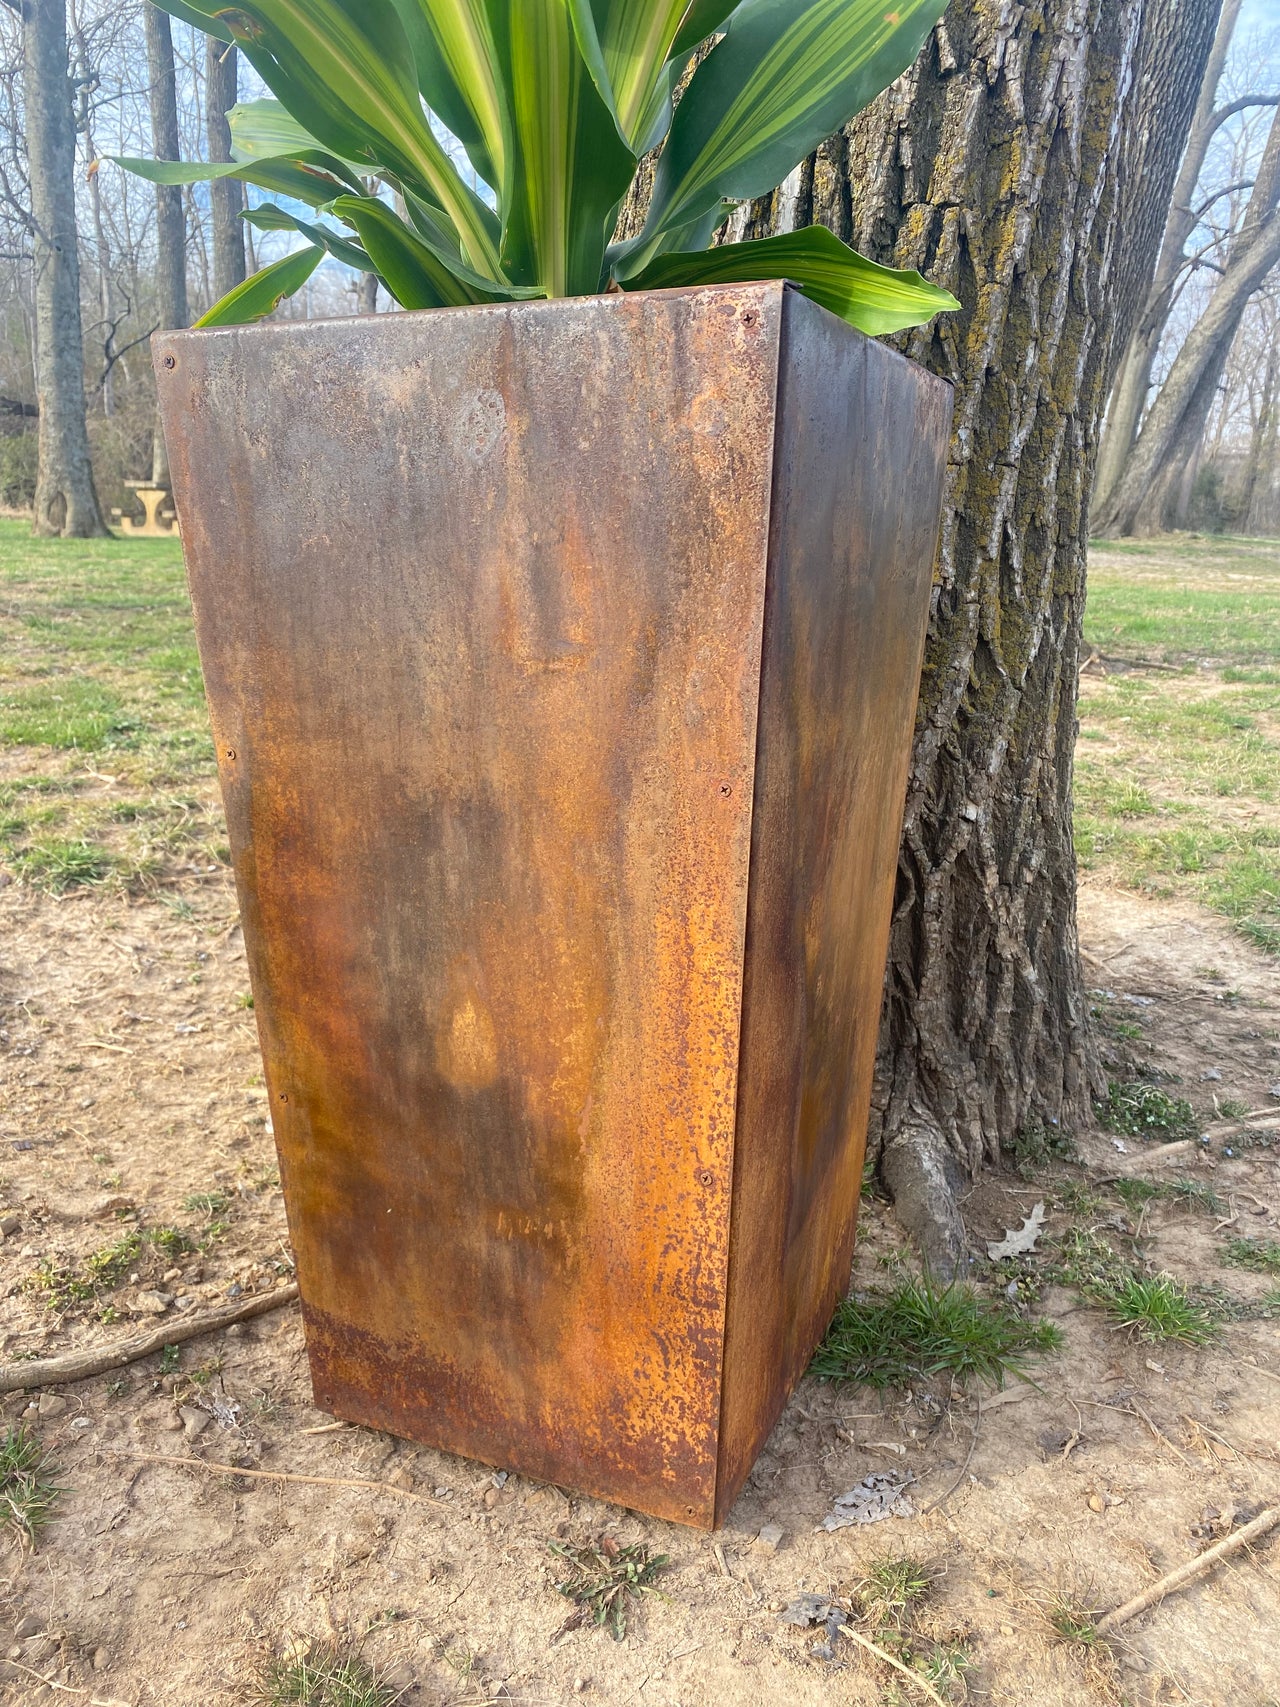 Pedestal Metal Planter - 14" x 14" x 26" Tall Large Planter - Front Door Decor - Planter Pot - Raw Steel Will Develop Natural Rusty Patina - Minimalist